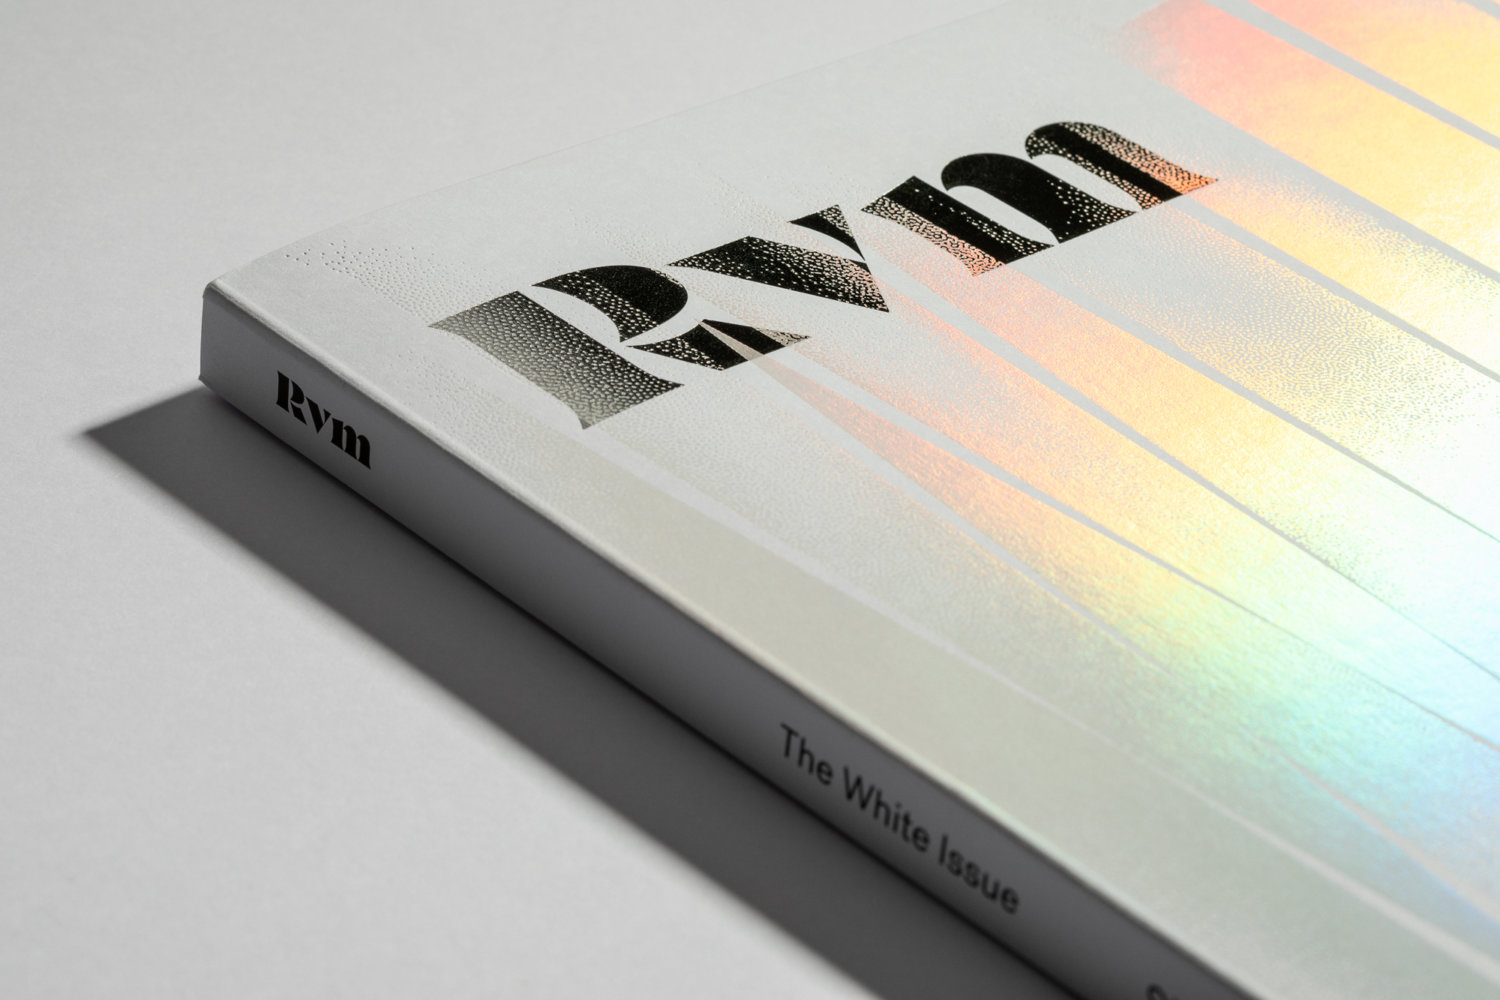 RVM White Issue cover